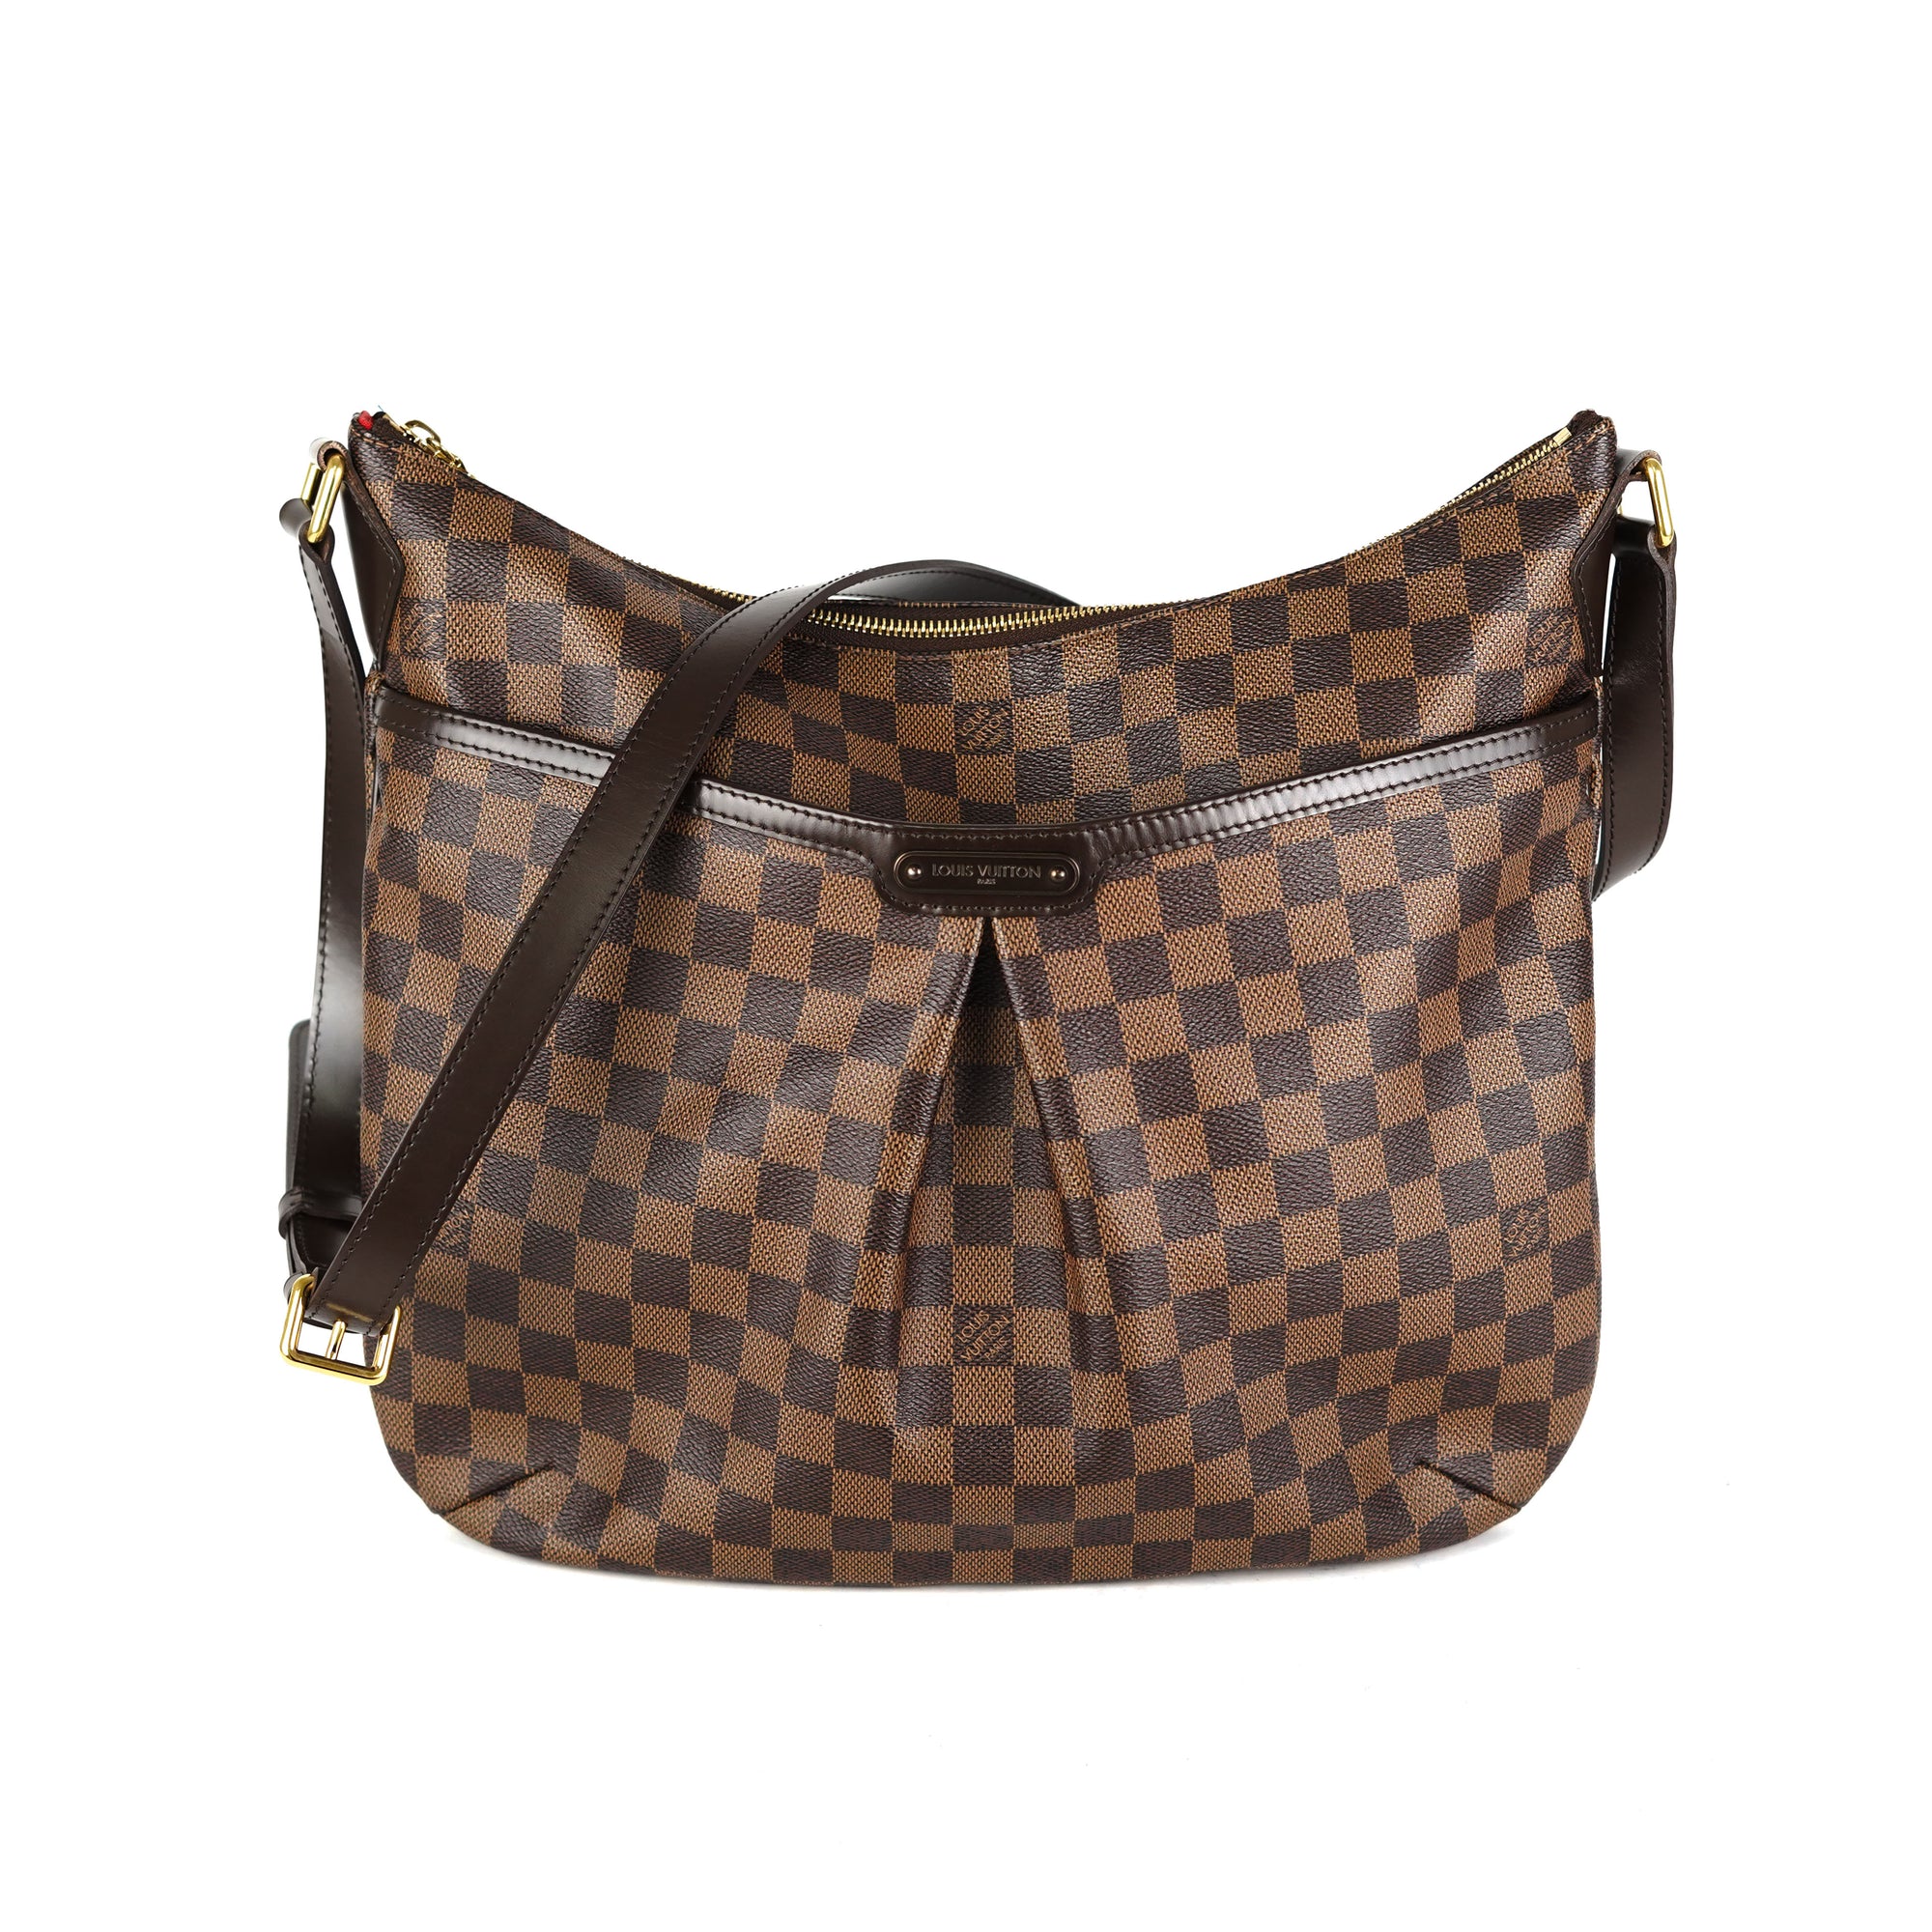 Louis Vuitton Bloomsbury Bag Review 